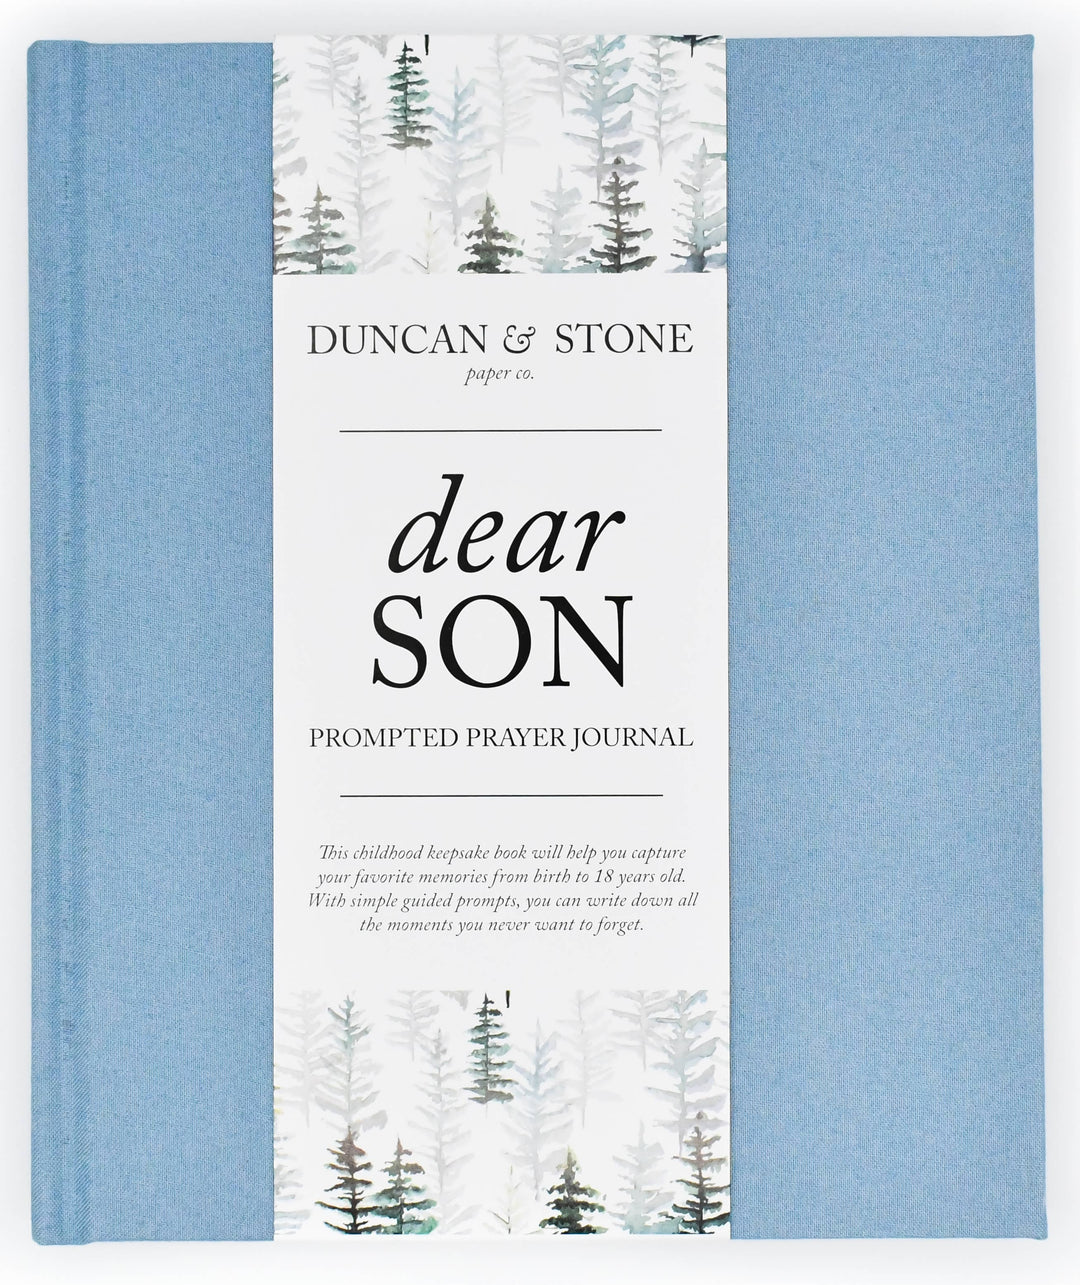 Duncan & Stone Paper Co. - Dear Son: Prompted Prayer Journal & Childhood Keepsake Book